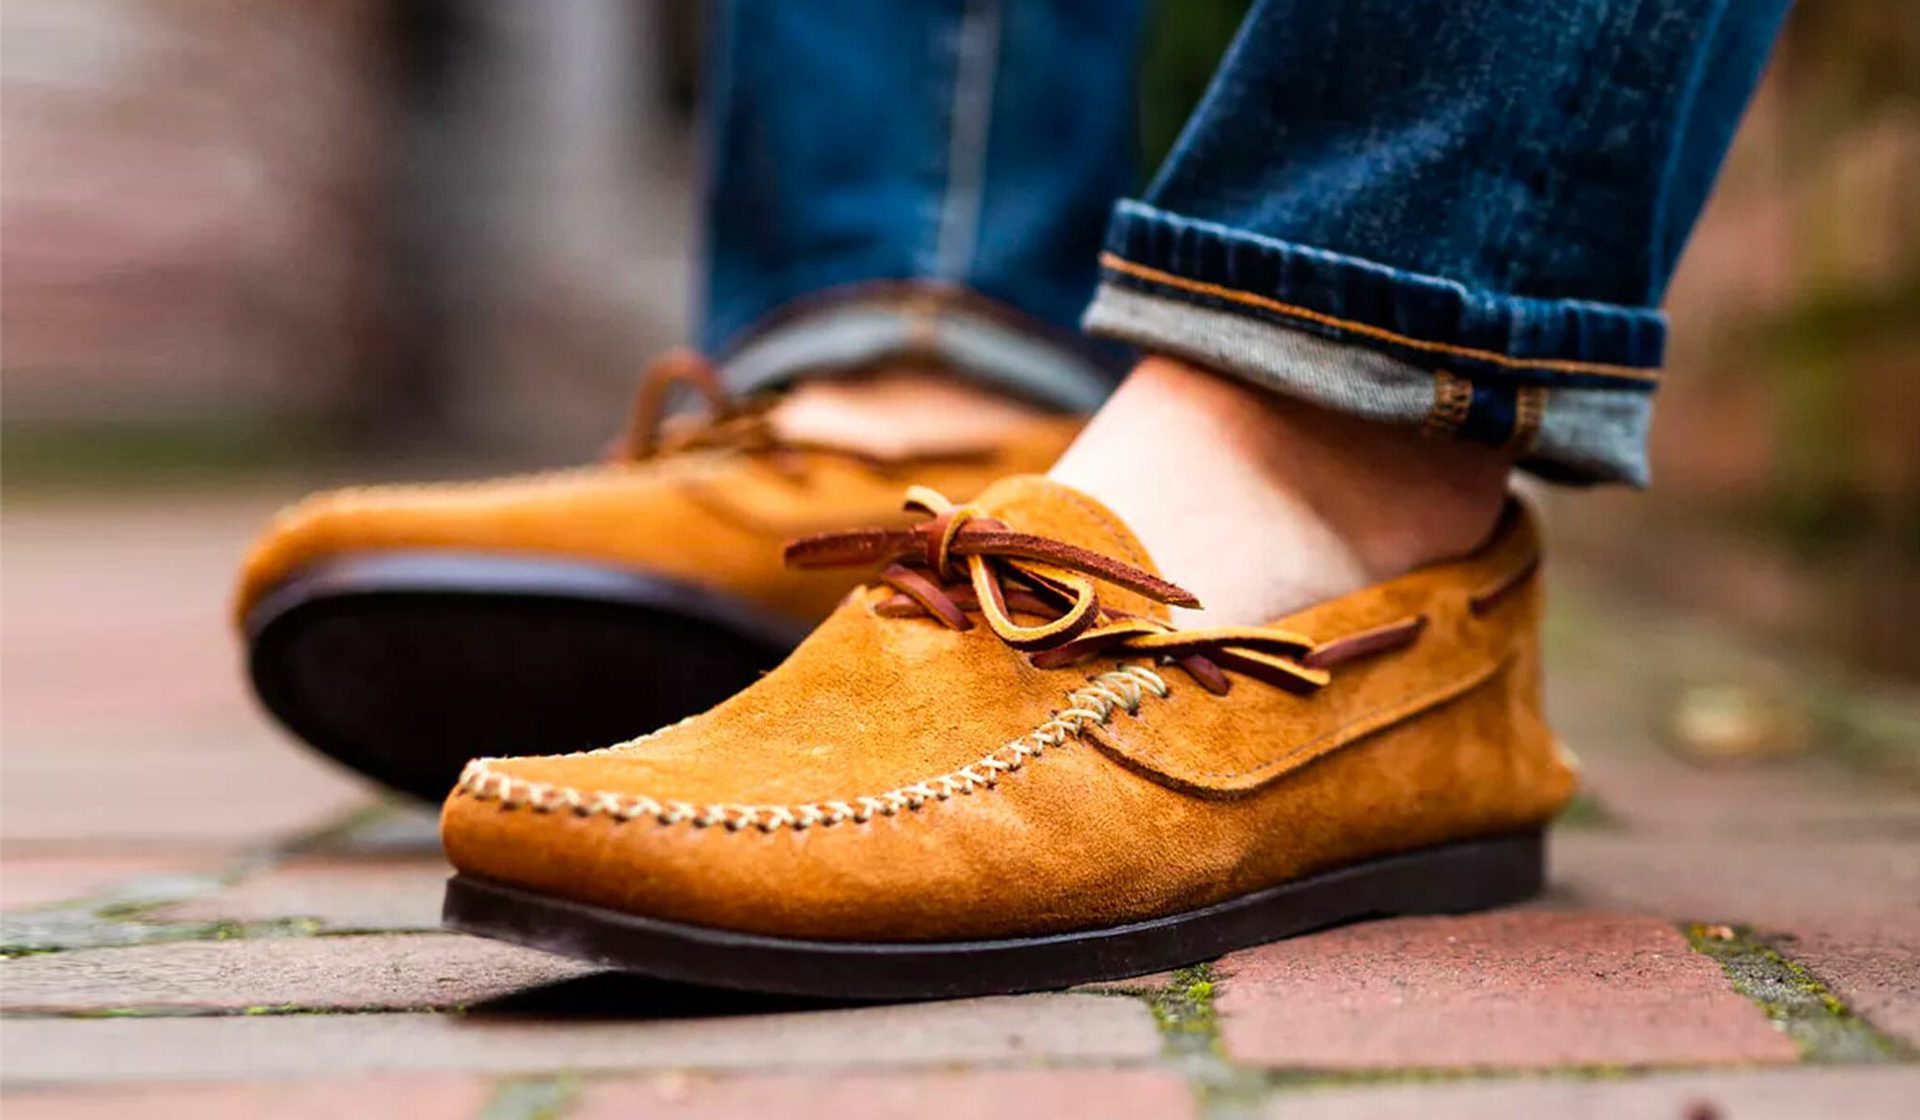 moccasin shoes for men